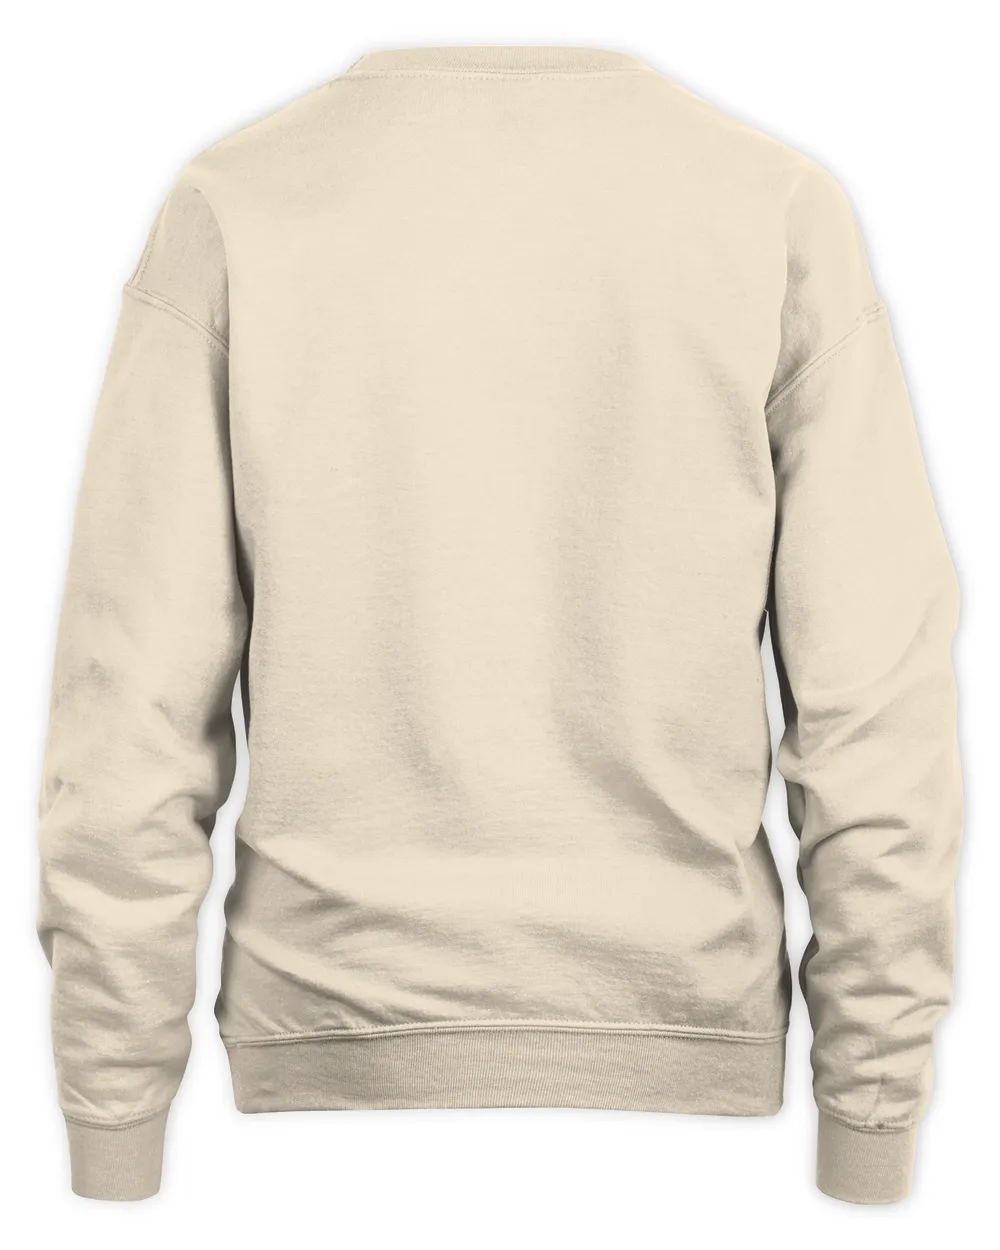 Plus Size Casual Sweatshirt, Women's Slightly Stretchy Round Neck Long Sleeve Sweatshirt